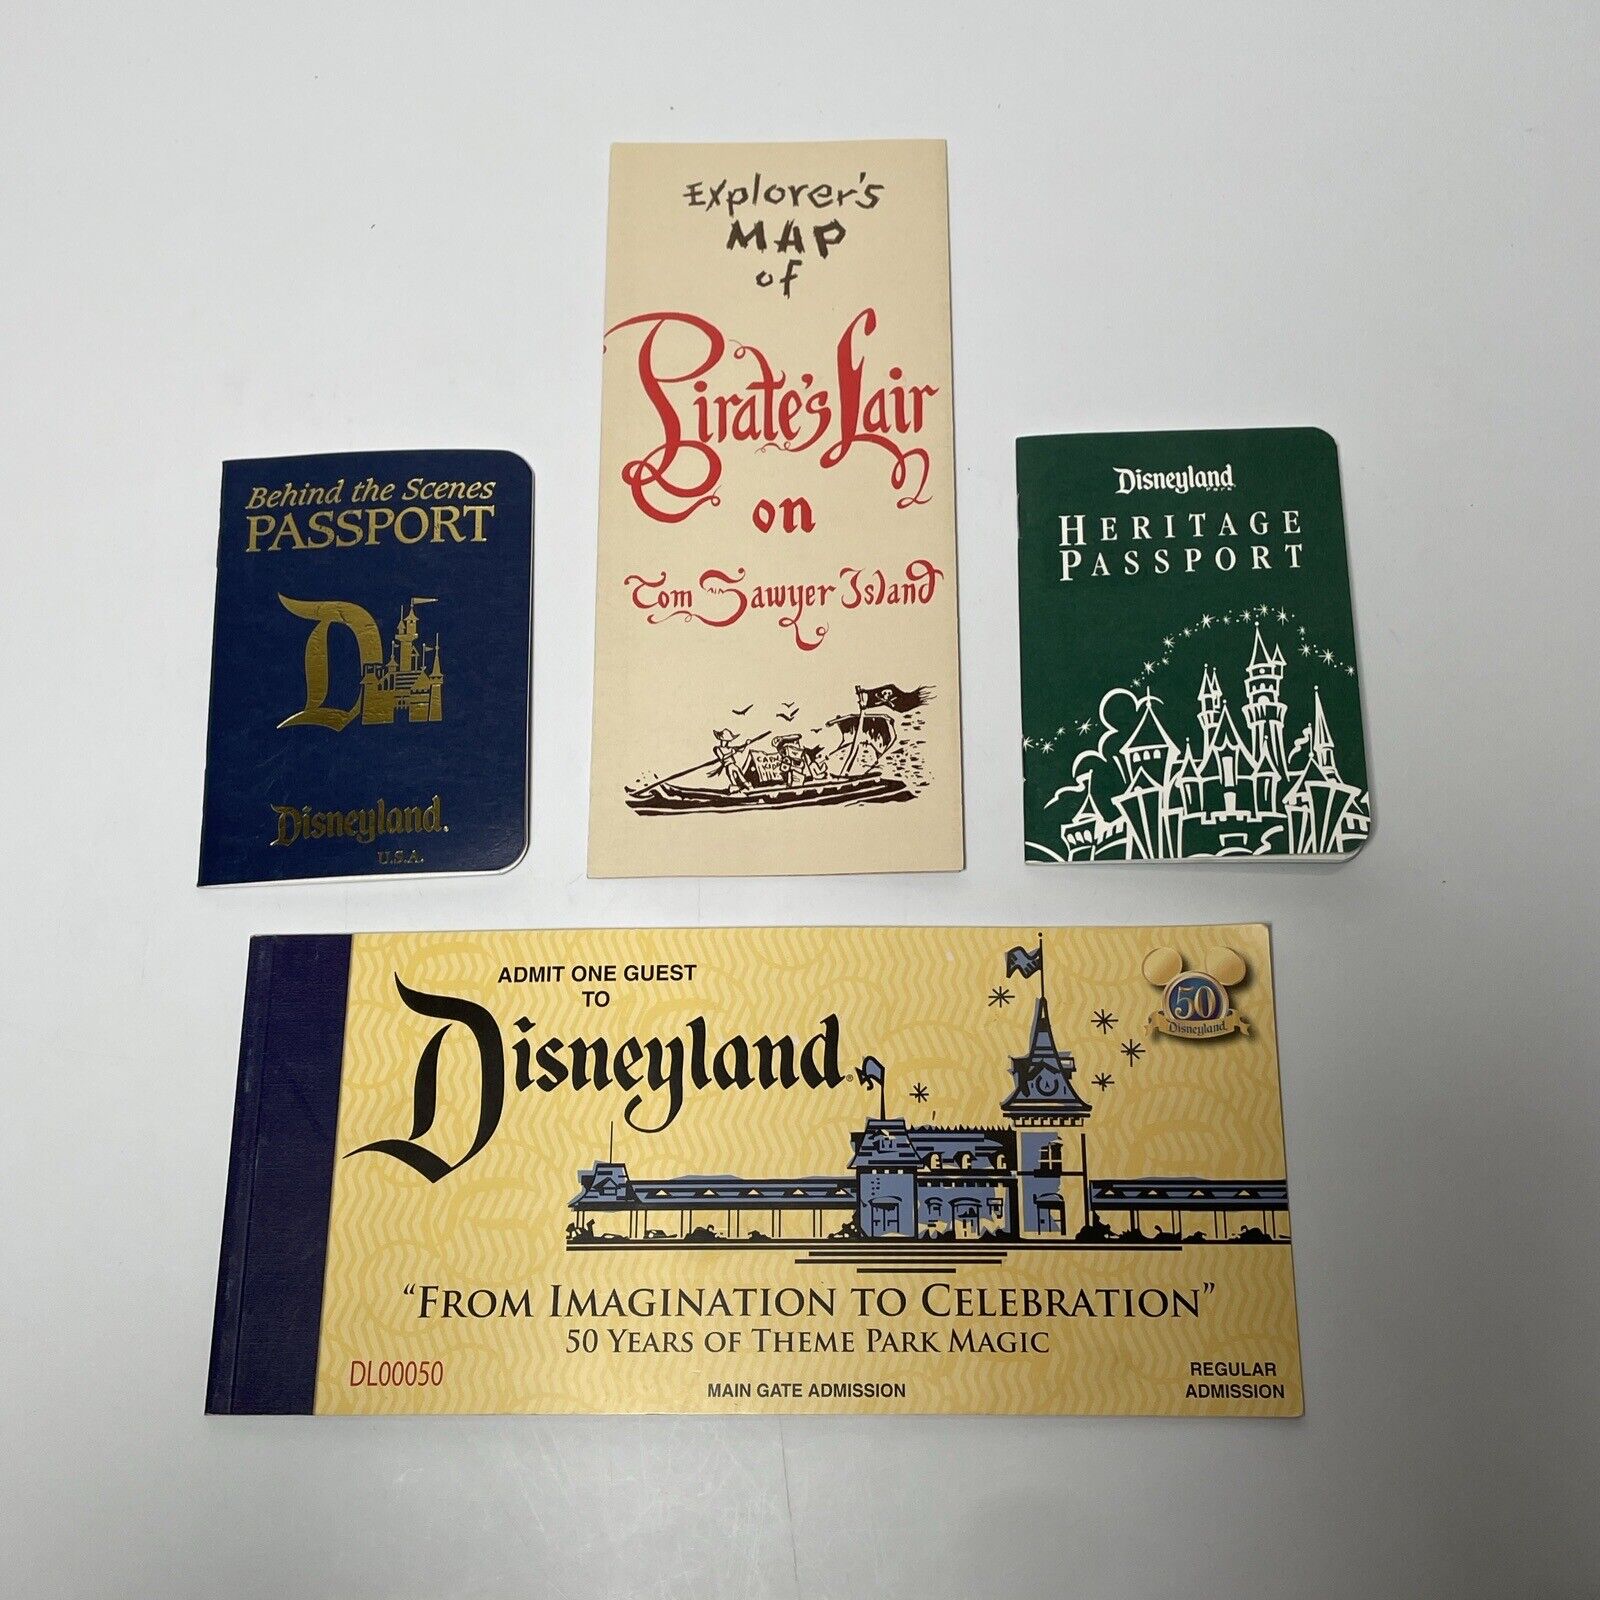 Disney Tom Sawyer Island Map, Heritage Passport, Behind the Scenes & Guide Tour